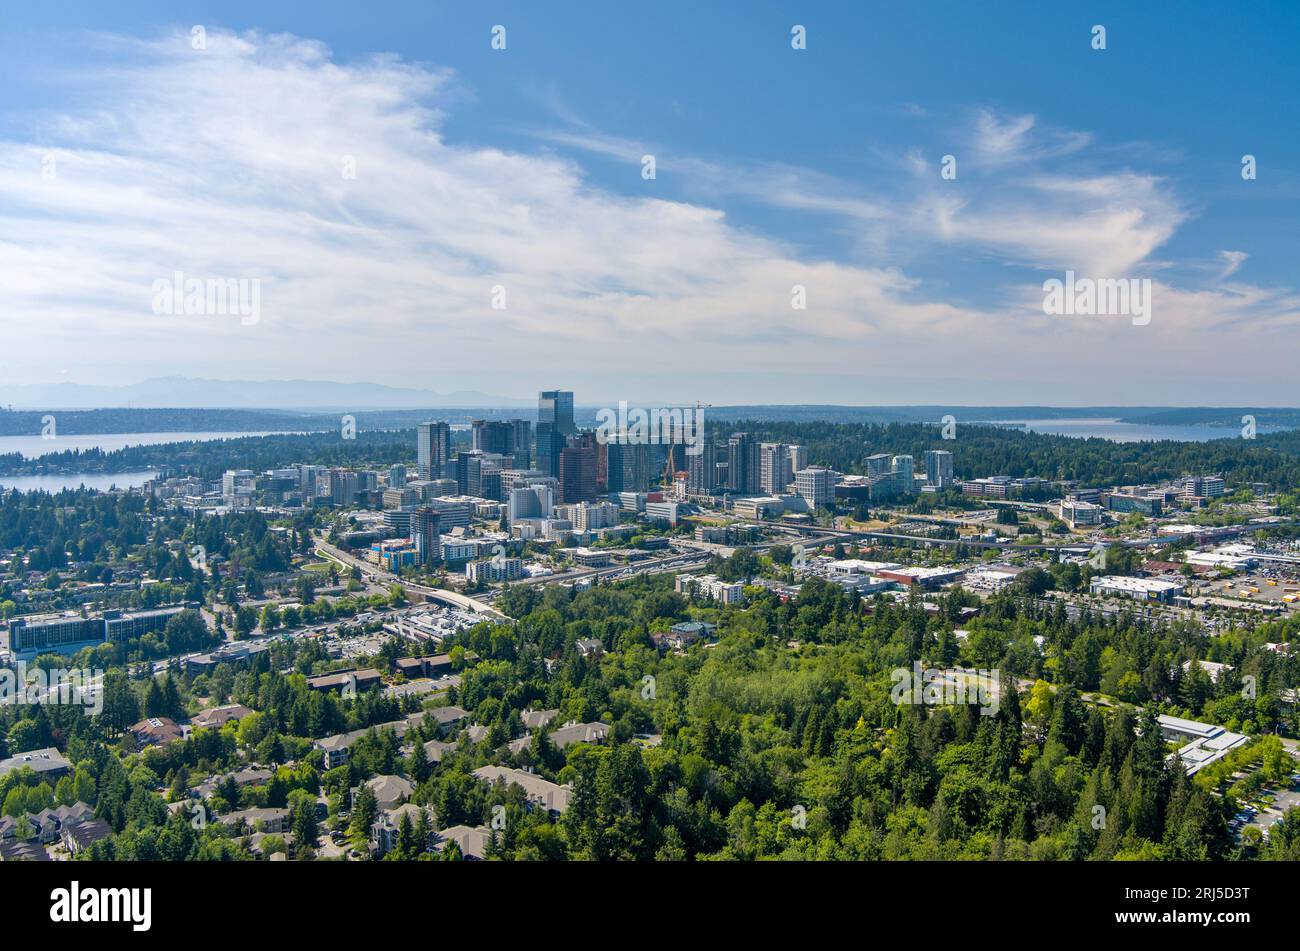 Aerial view of Bellevue, Washington Stock Photo